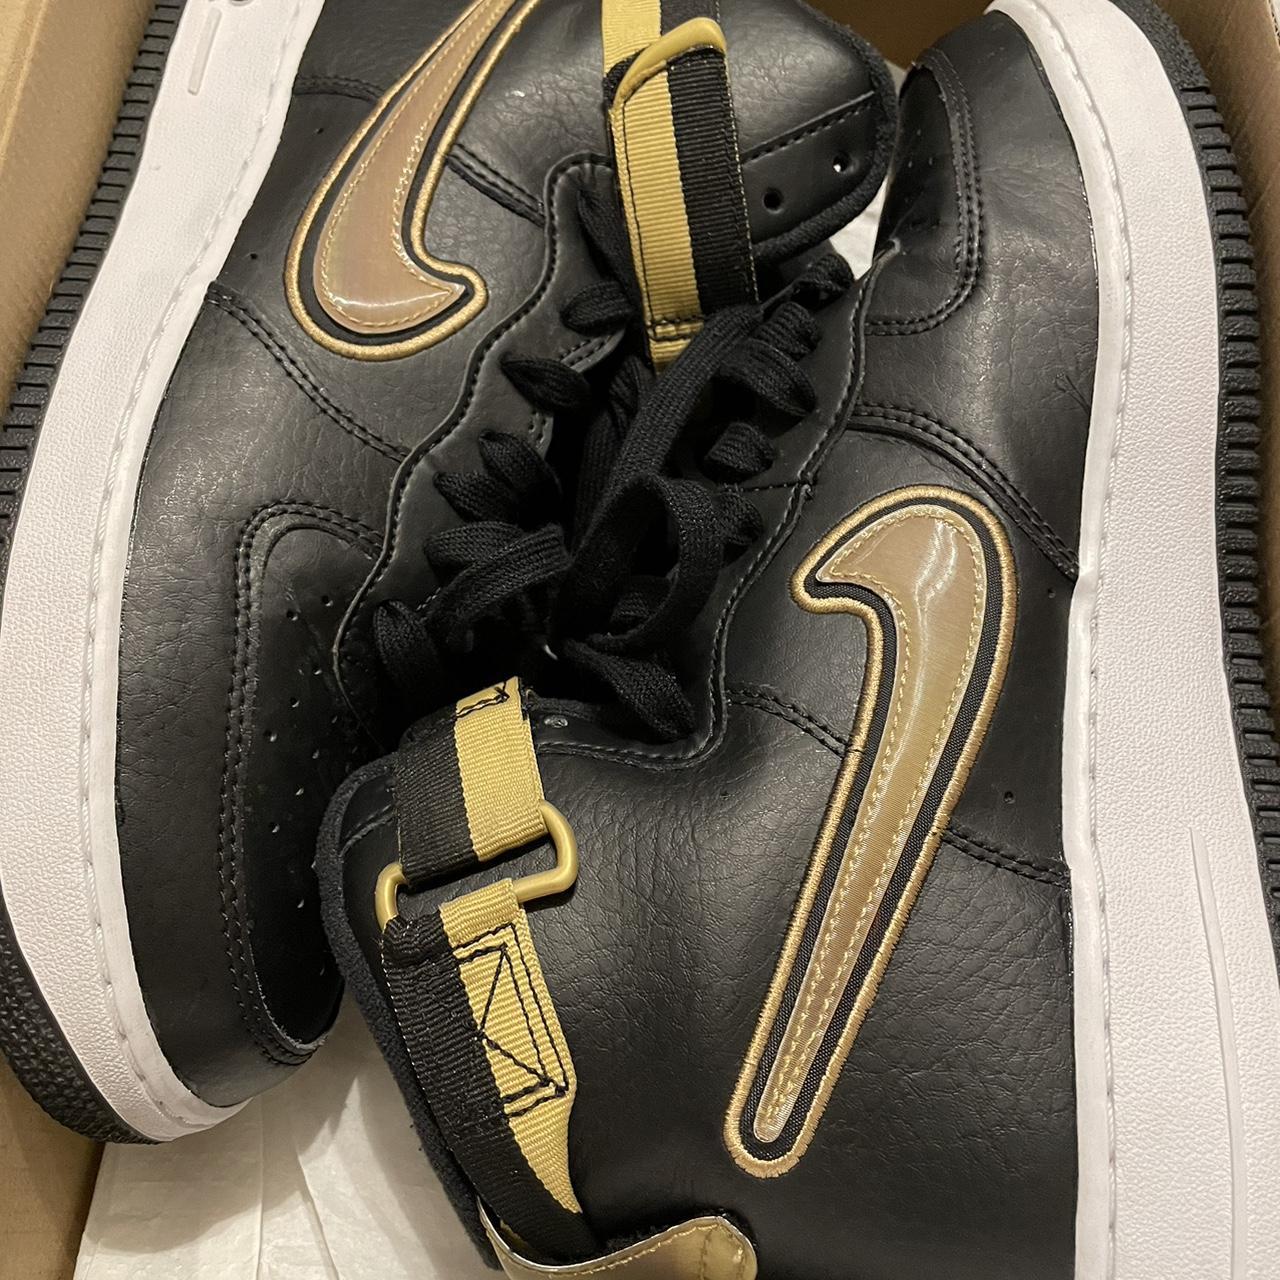 Nike Air Force 1 High '07 LV8 Sport Sneaker